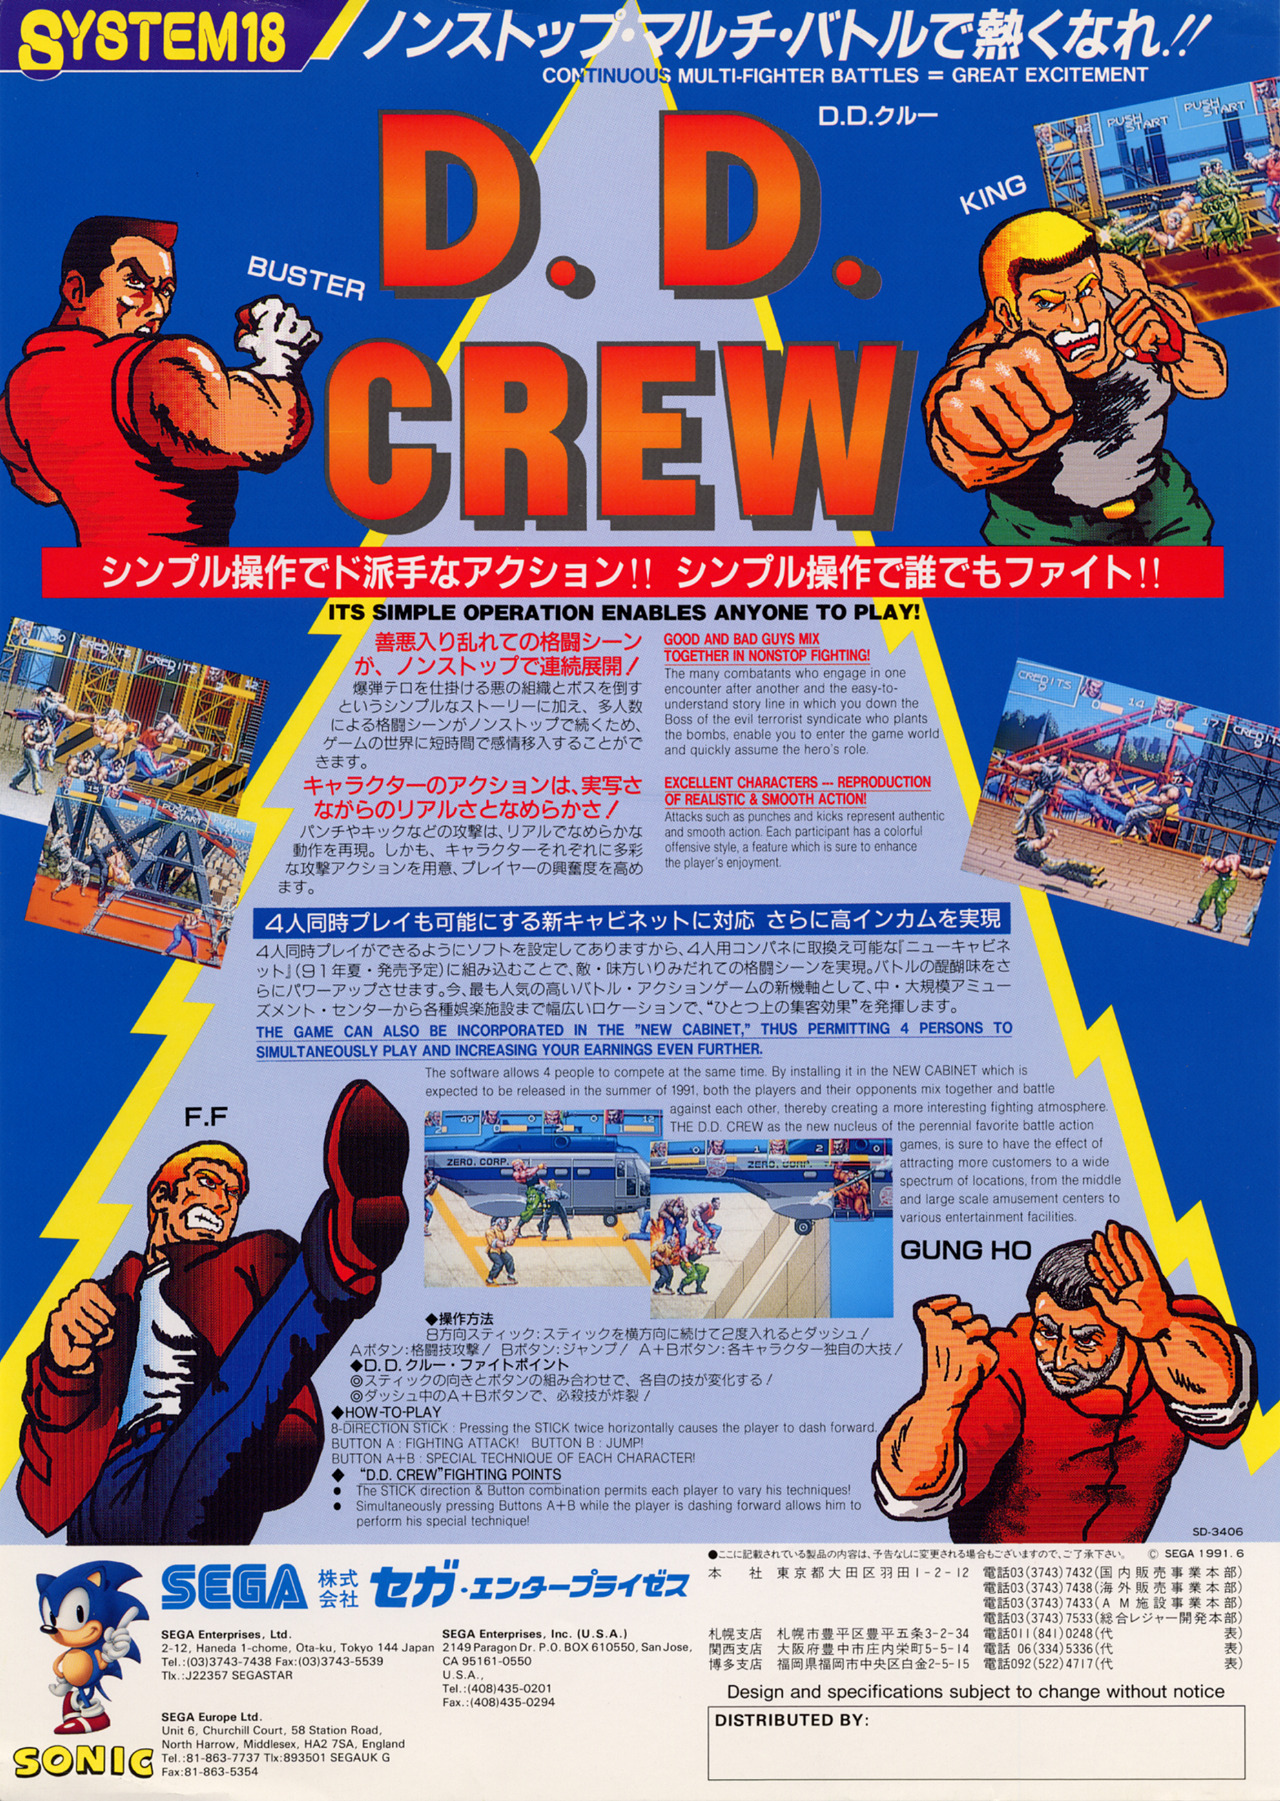 DDCrew System18 JP Flyer.jpg